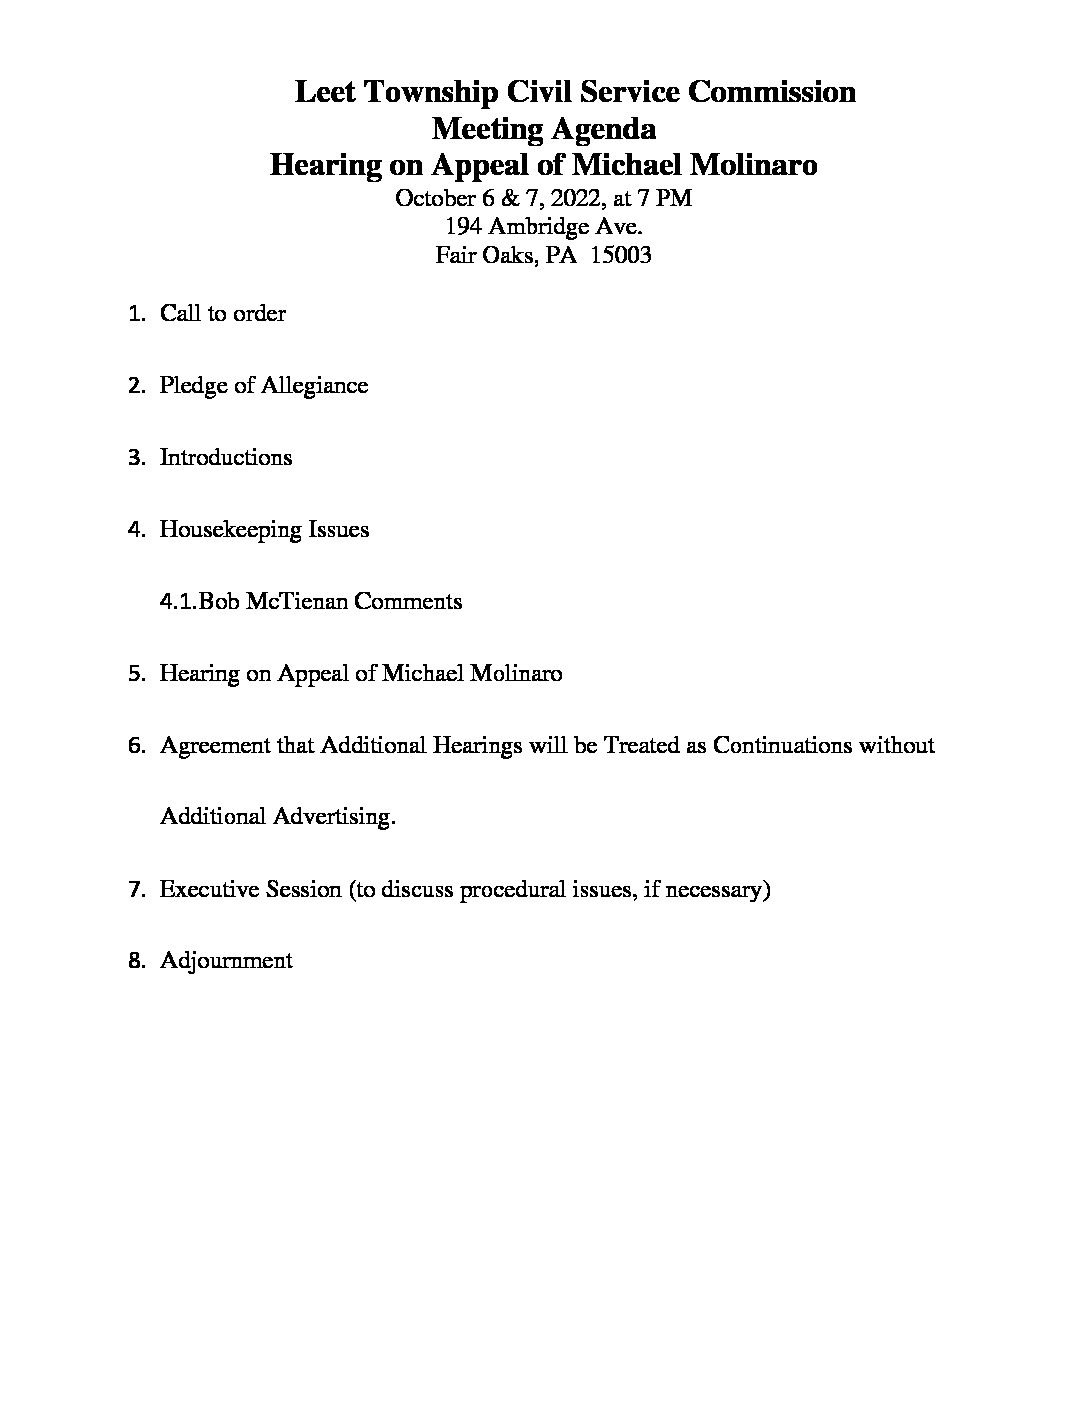 Rev. Agenda for Molinaro Hearings 100622